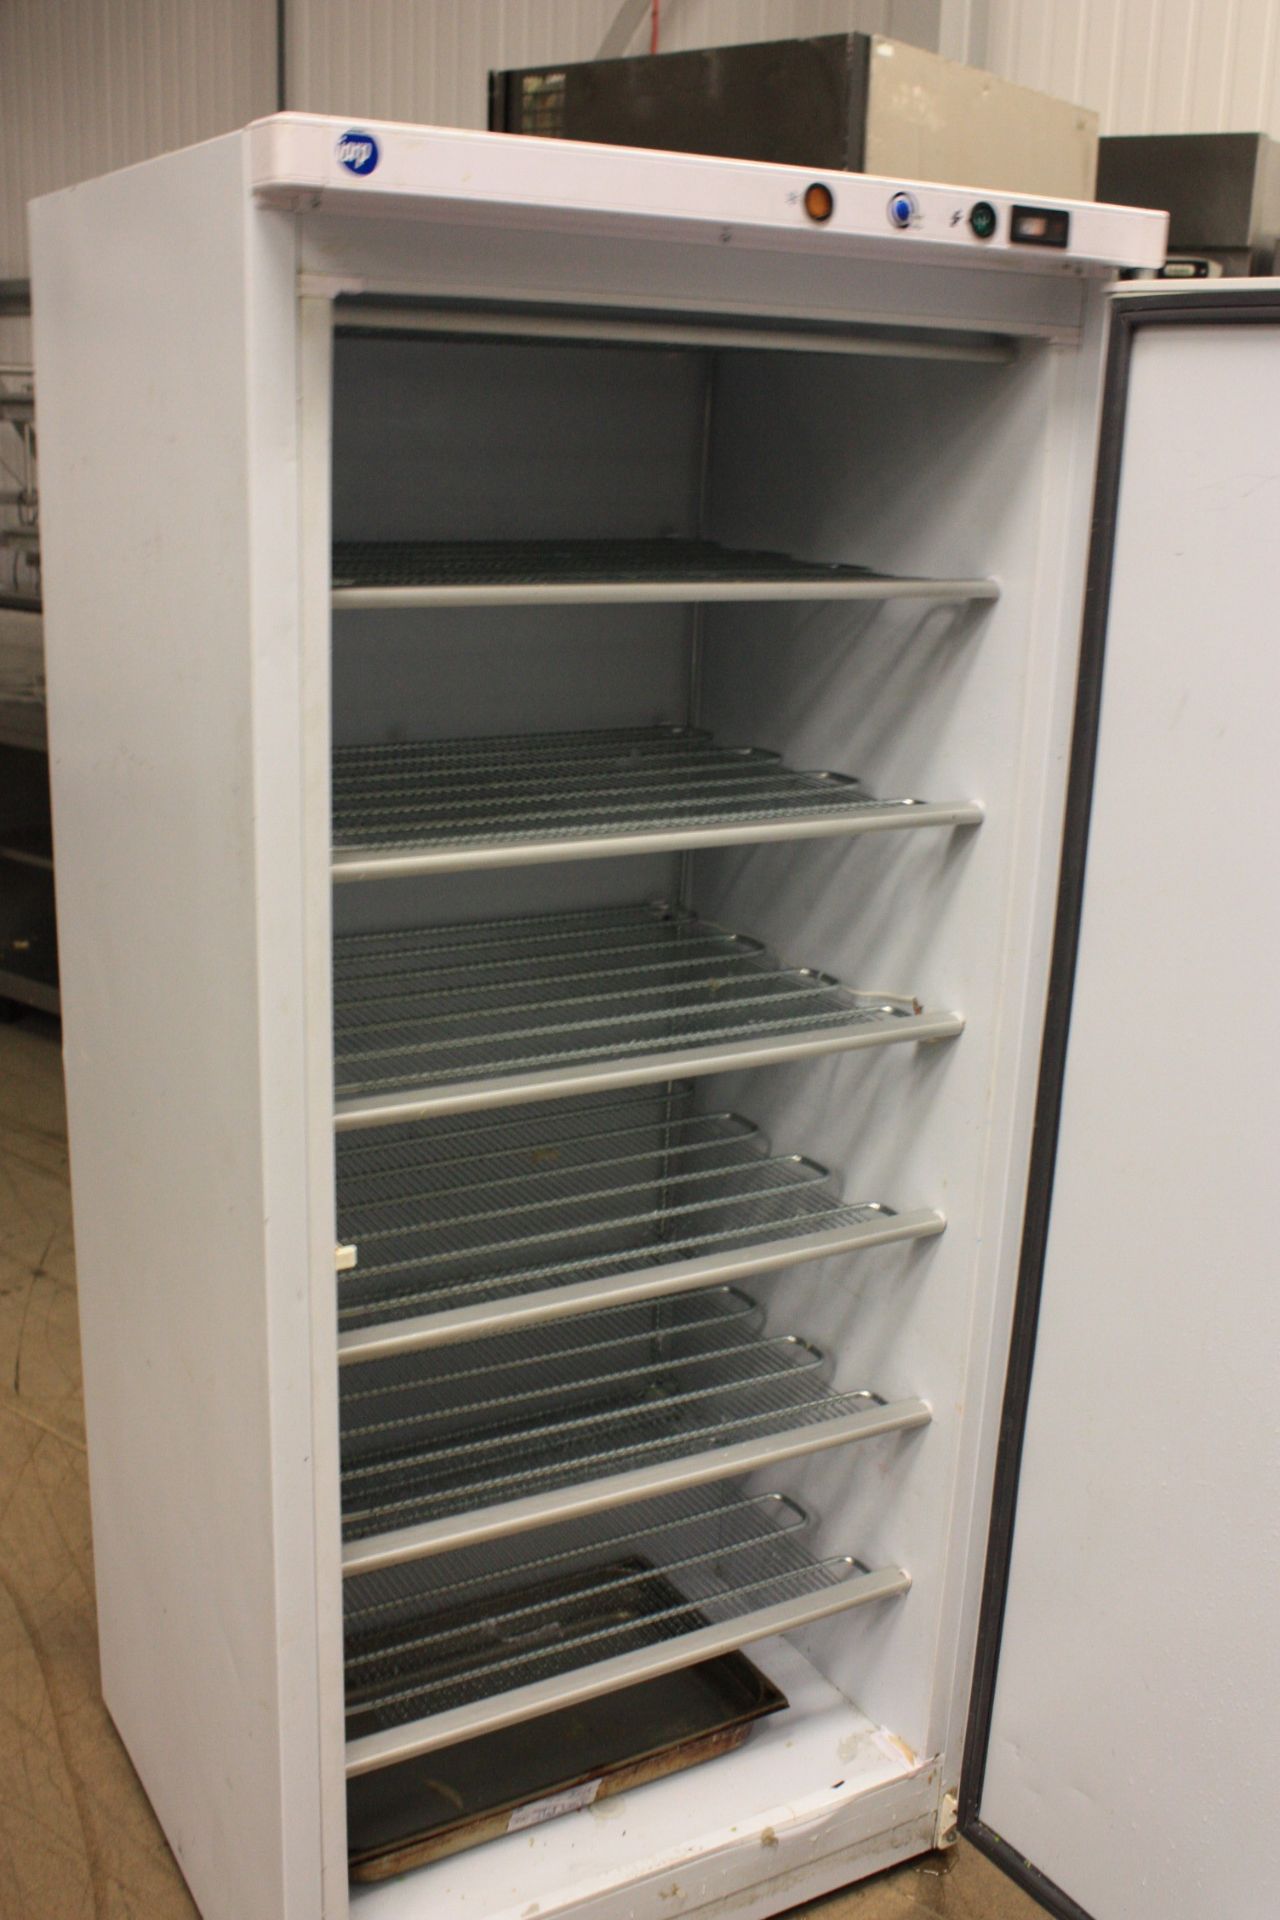 Iarp Upright Freezer 6 shelf. Size: 1700mm high x 770mm wide x 720mm deep - Image 2 of 2